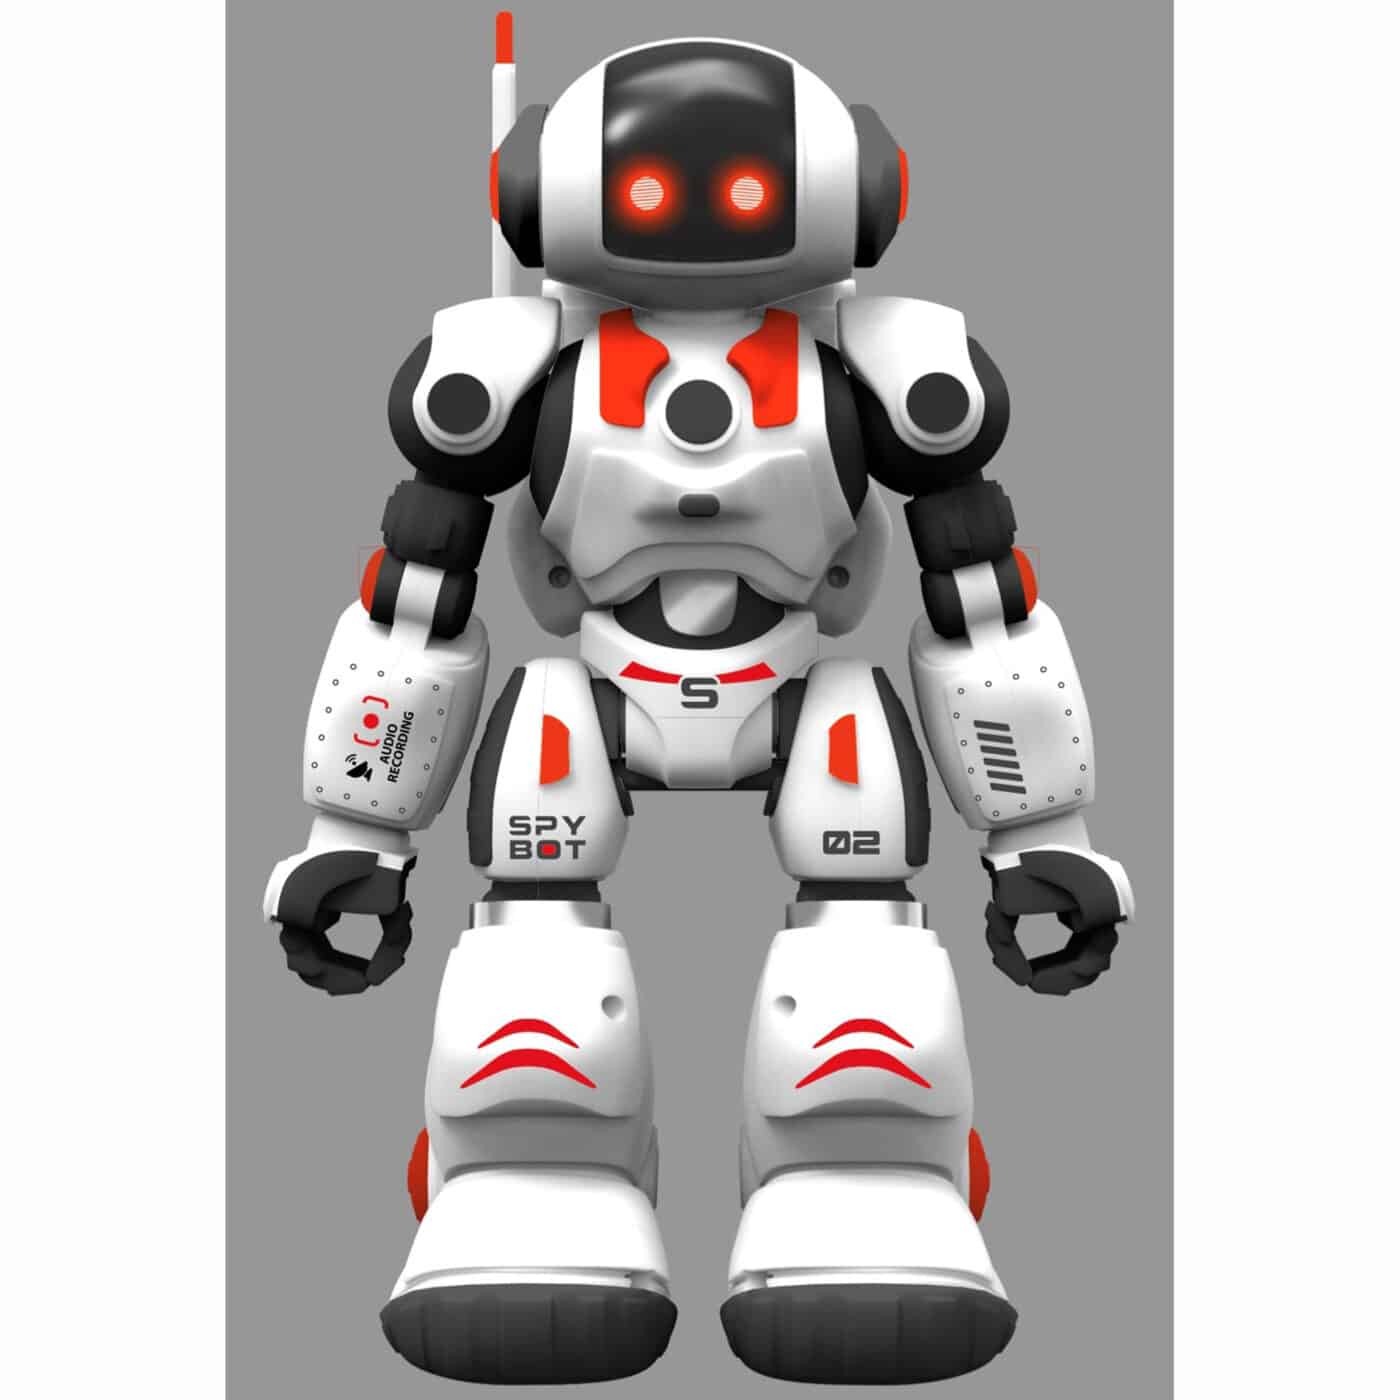 Xtrem Bots James The SPY Bot-1